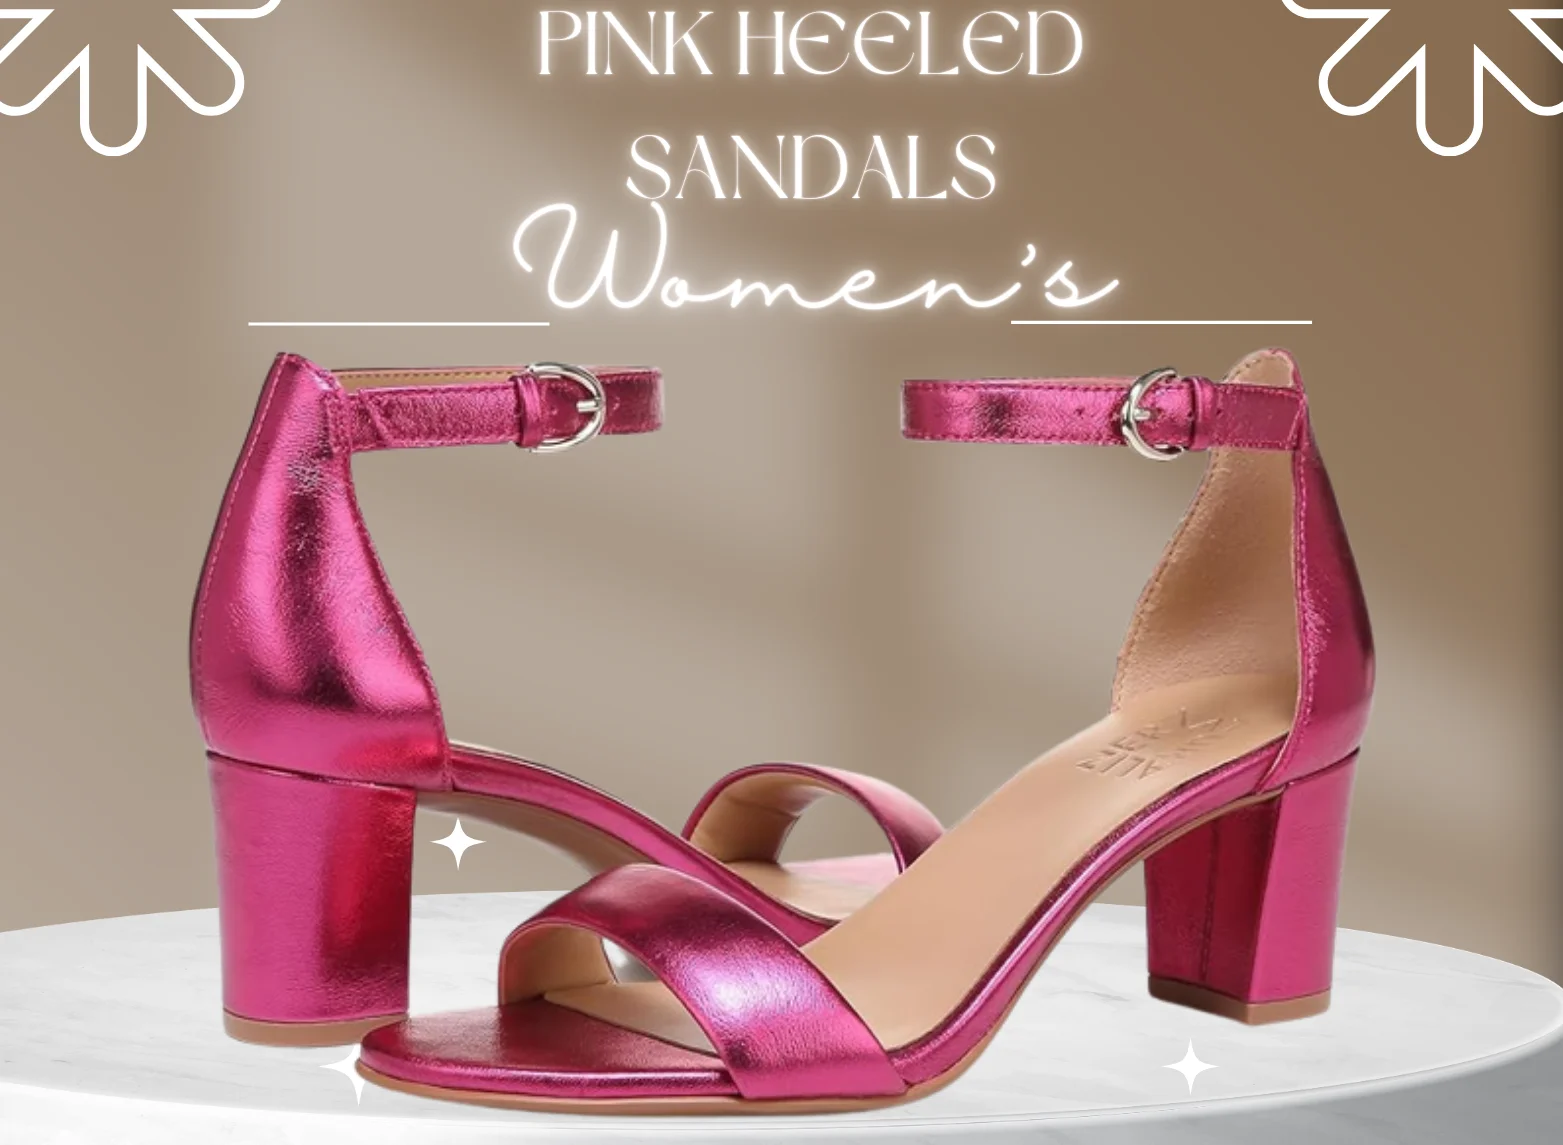 Pink Heeled sandals